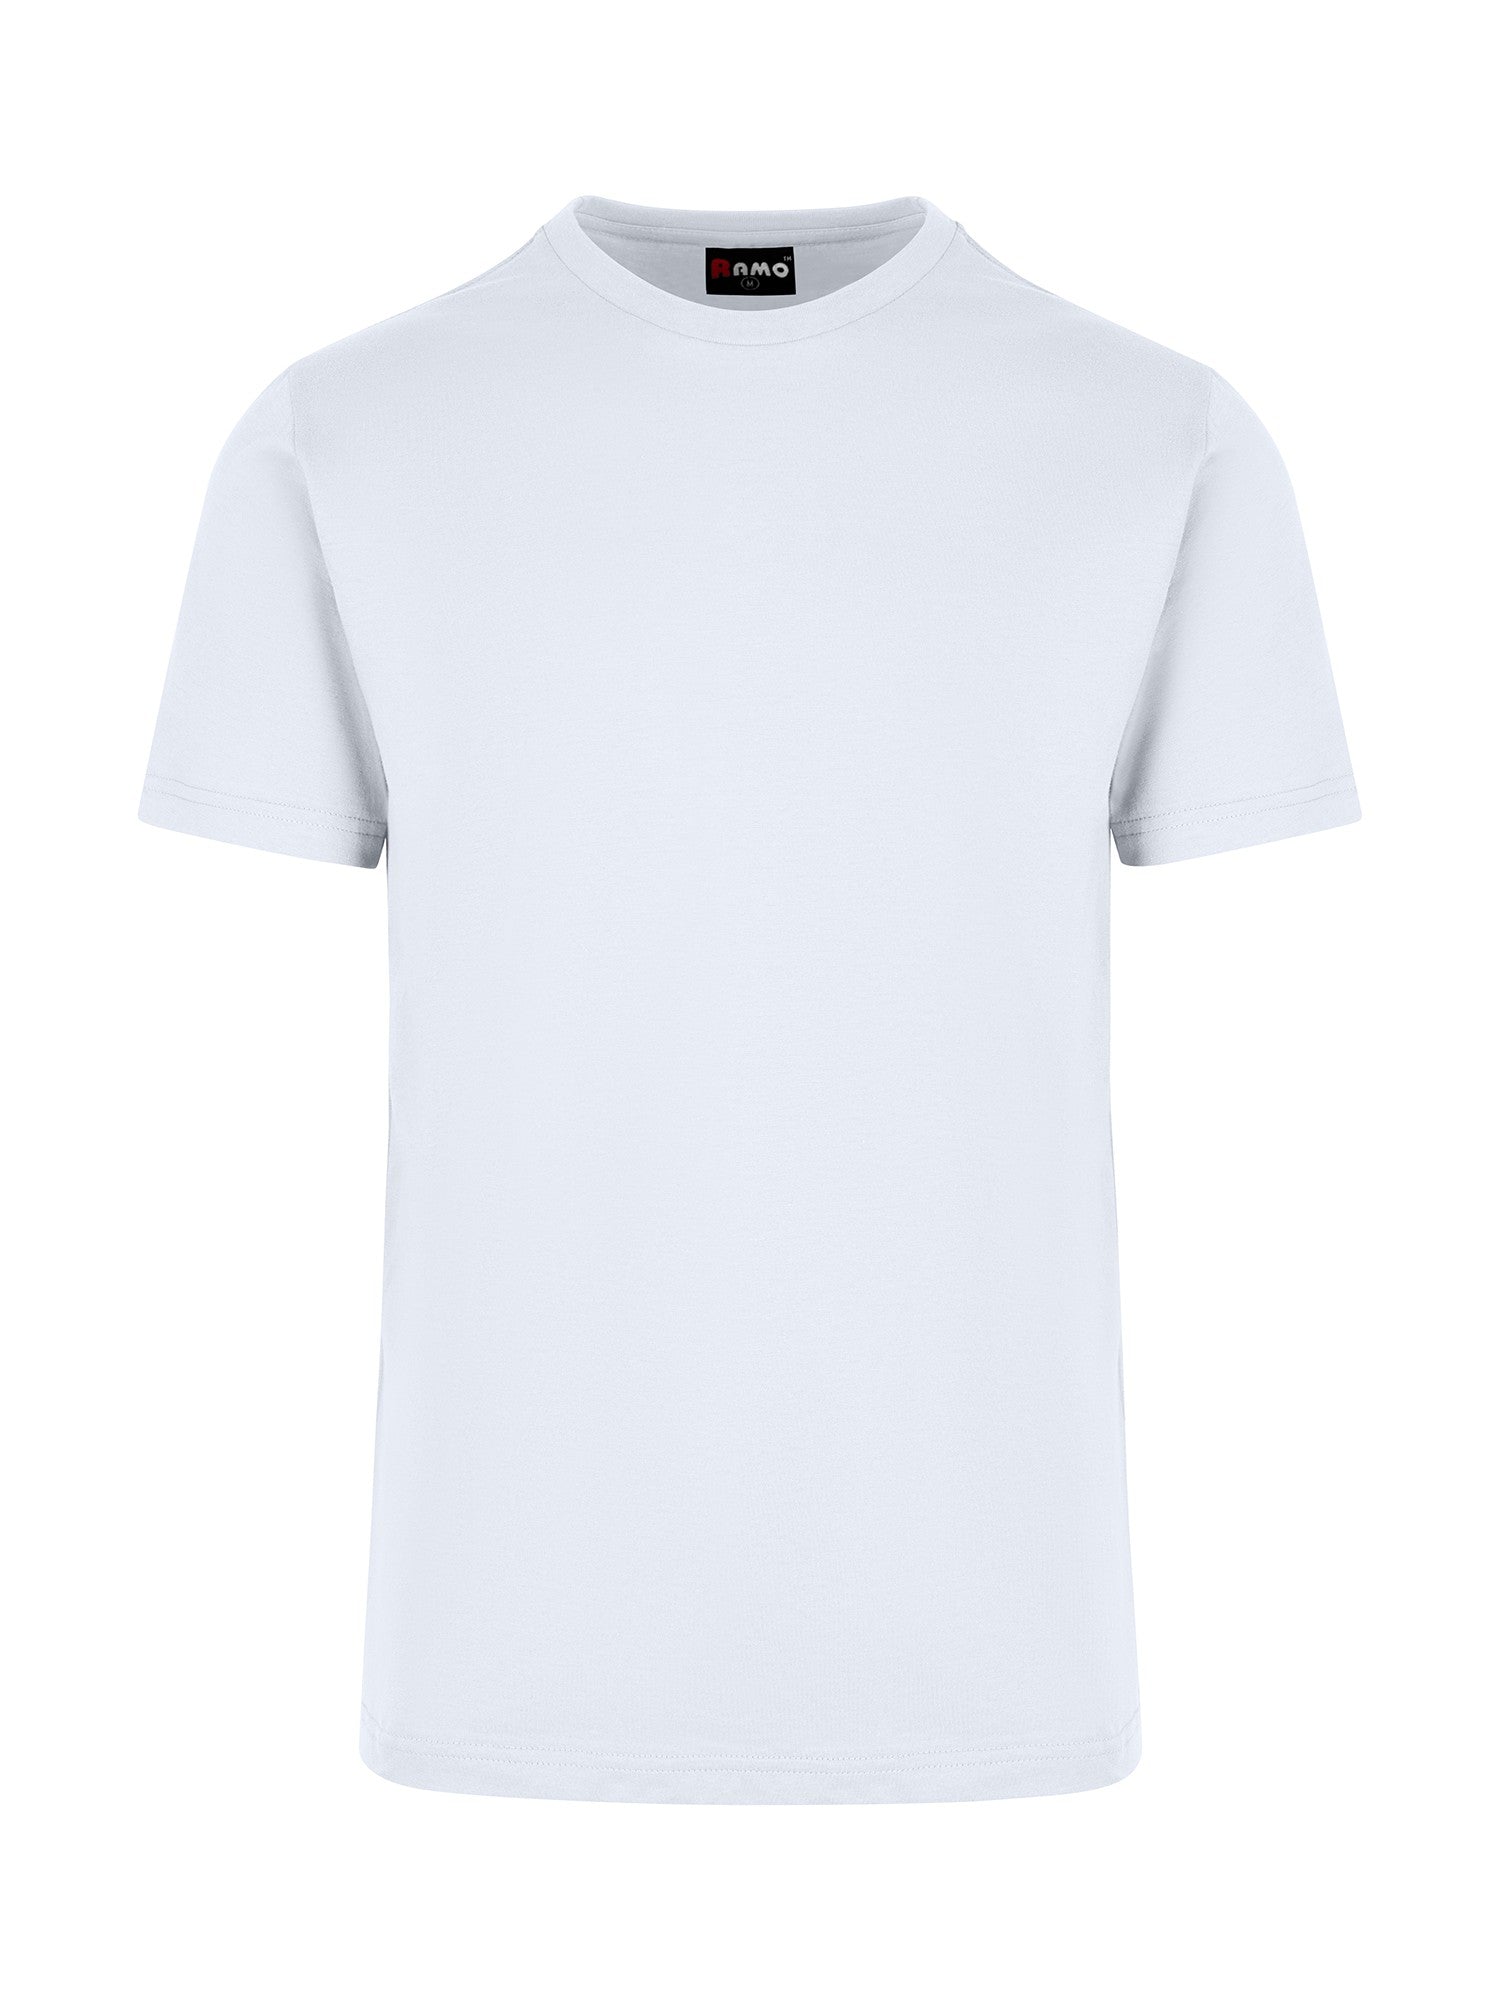 Ramo Mens American Style T-shirt  (T801HC)